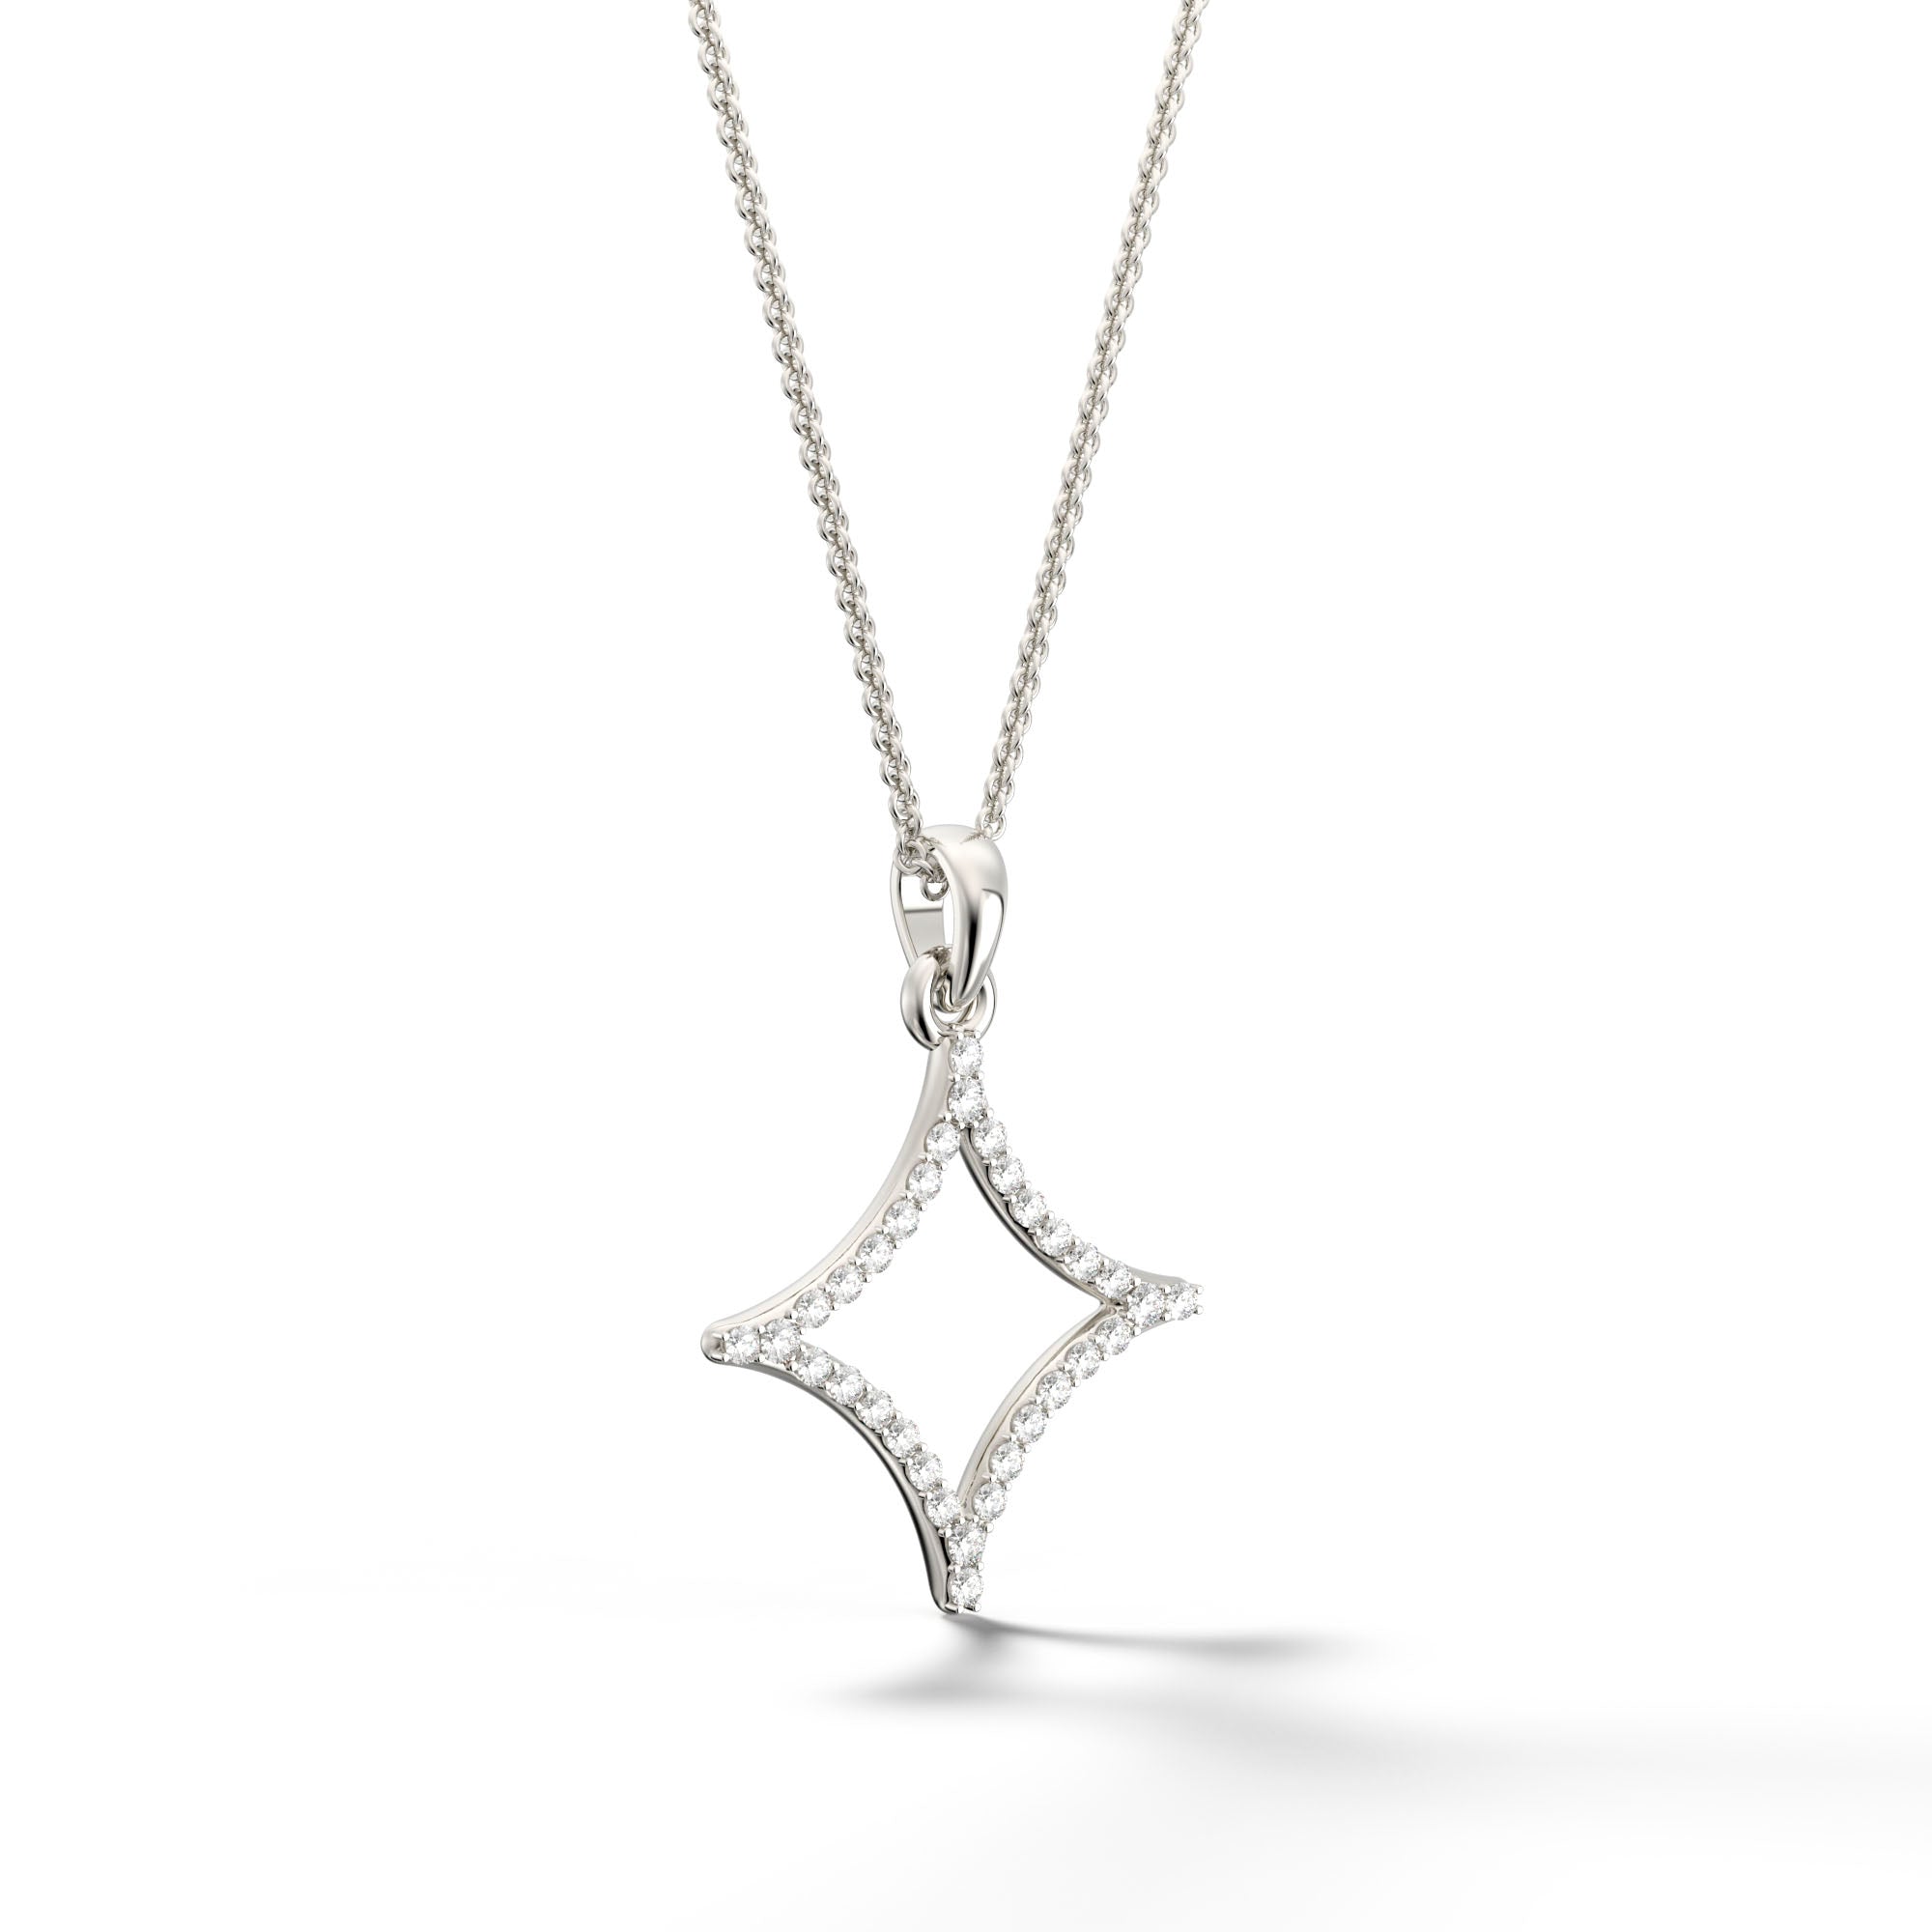 Csillag Sirius - White Gold Pendant with Diamonds Necklace - Csilla Jewelry